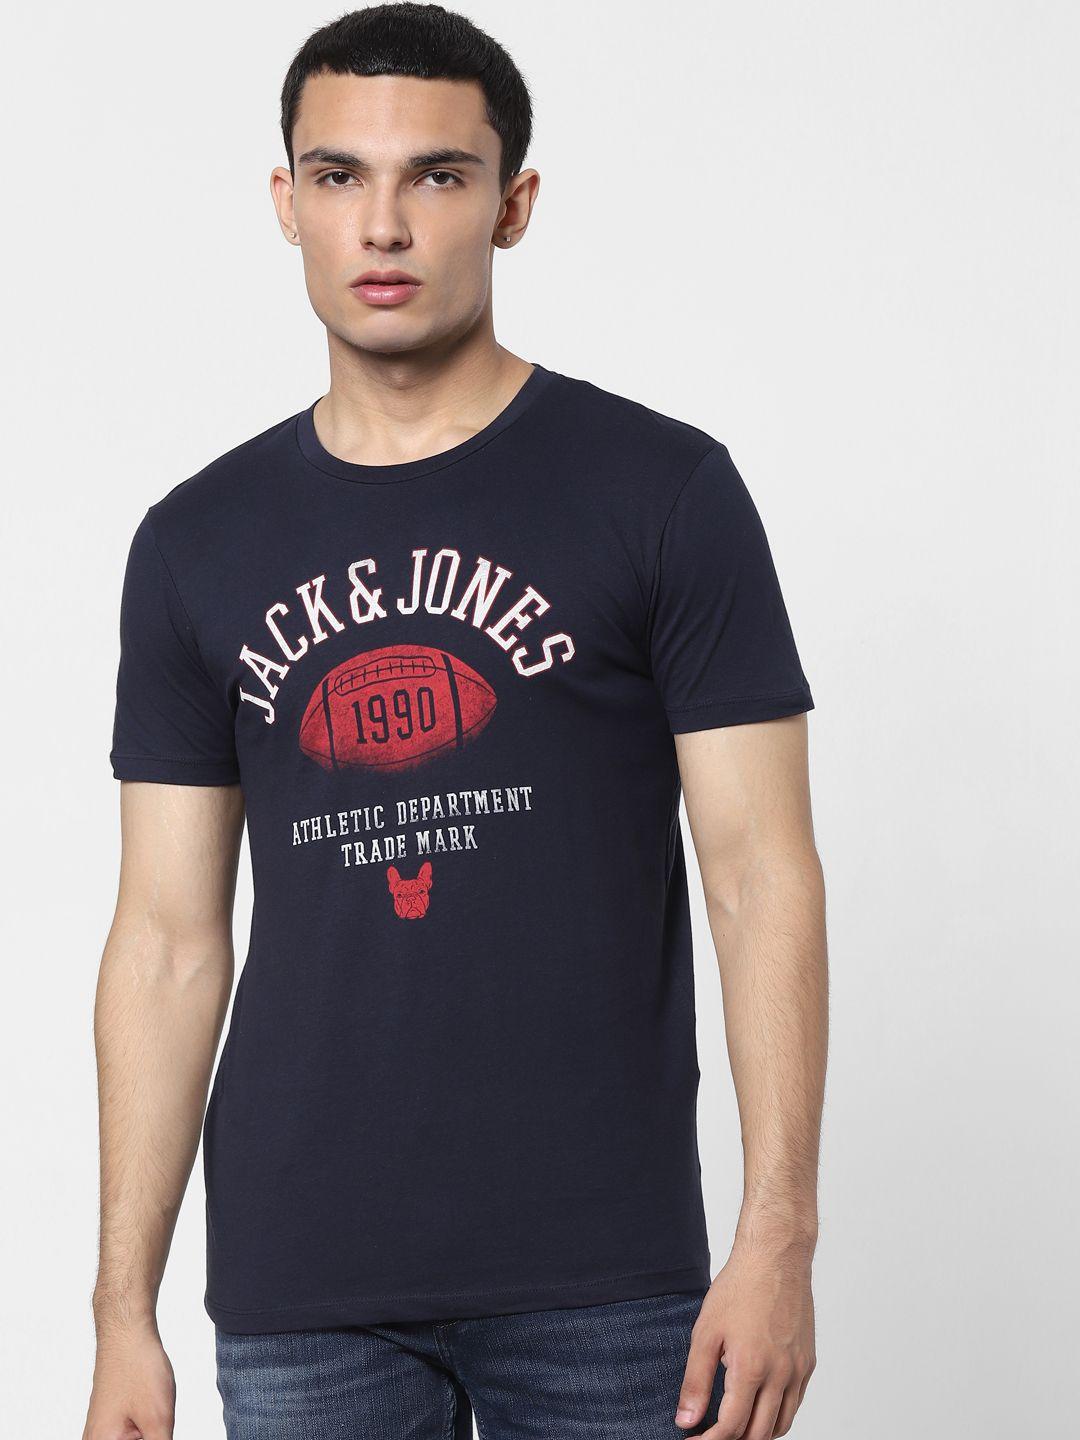 jack & jones men navy blue brand logo printed pure cotton t-shirt